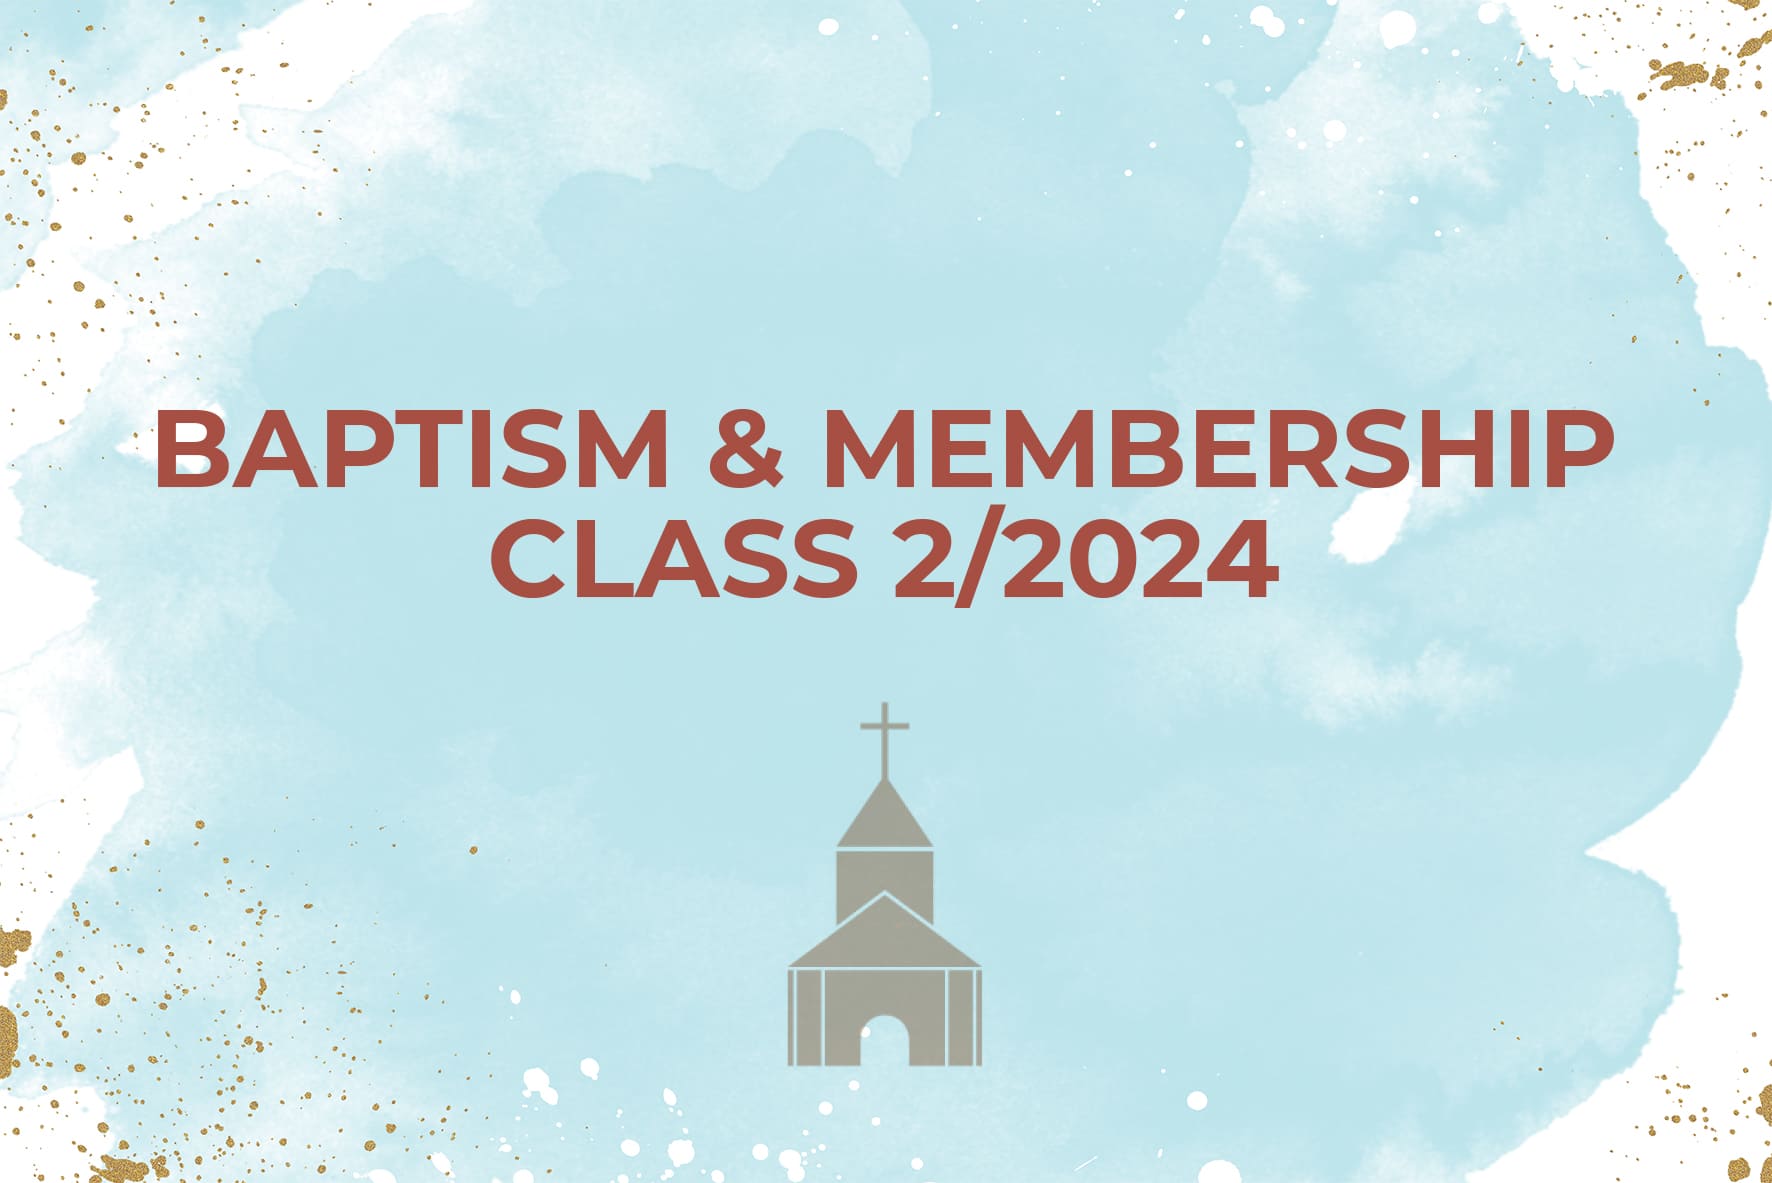 Baptism & Membership Class 2/2024